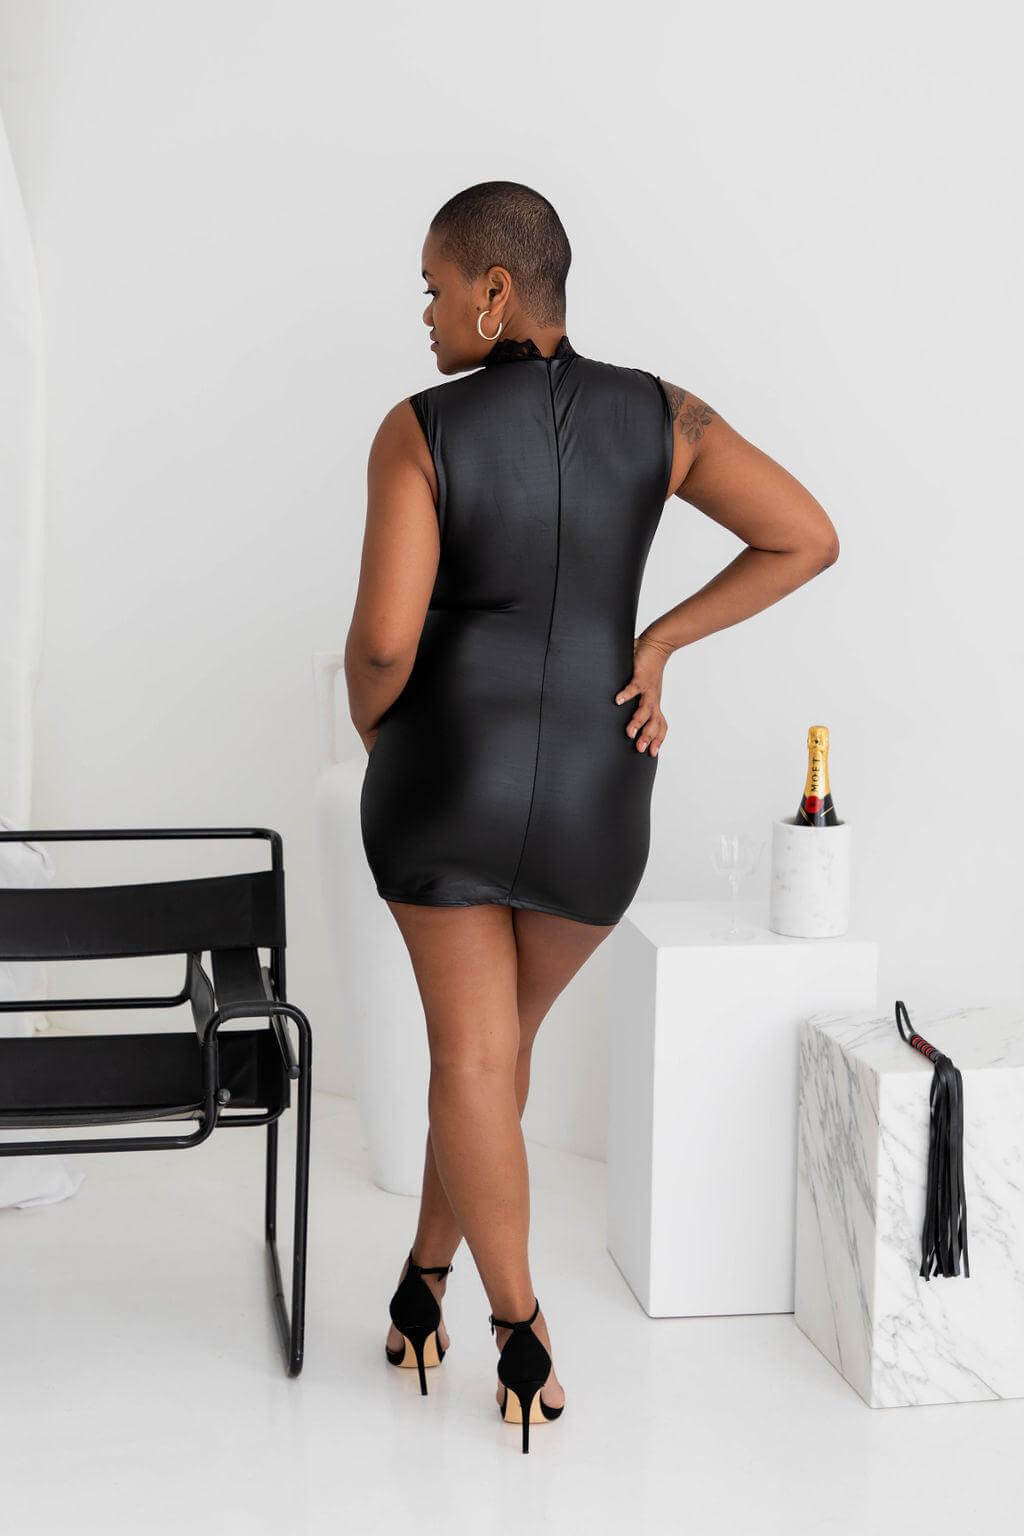 Blaze Black Vegan Leather Dress - $68.00 - CHEMISE - Naked Curve